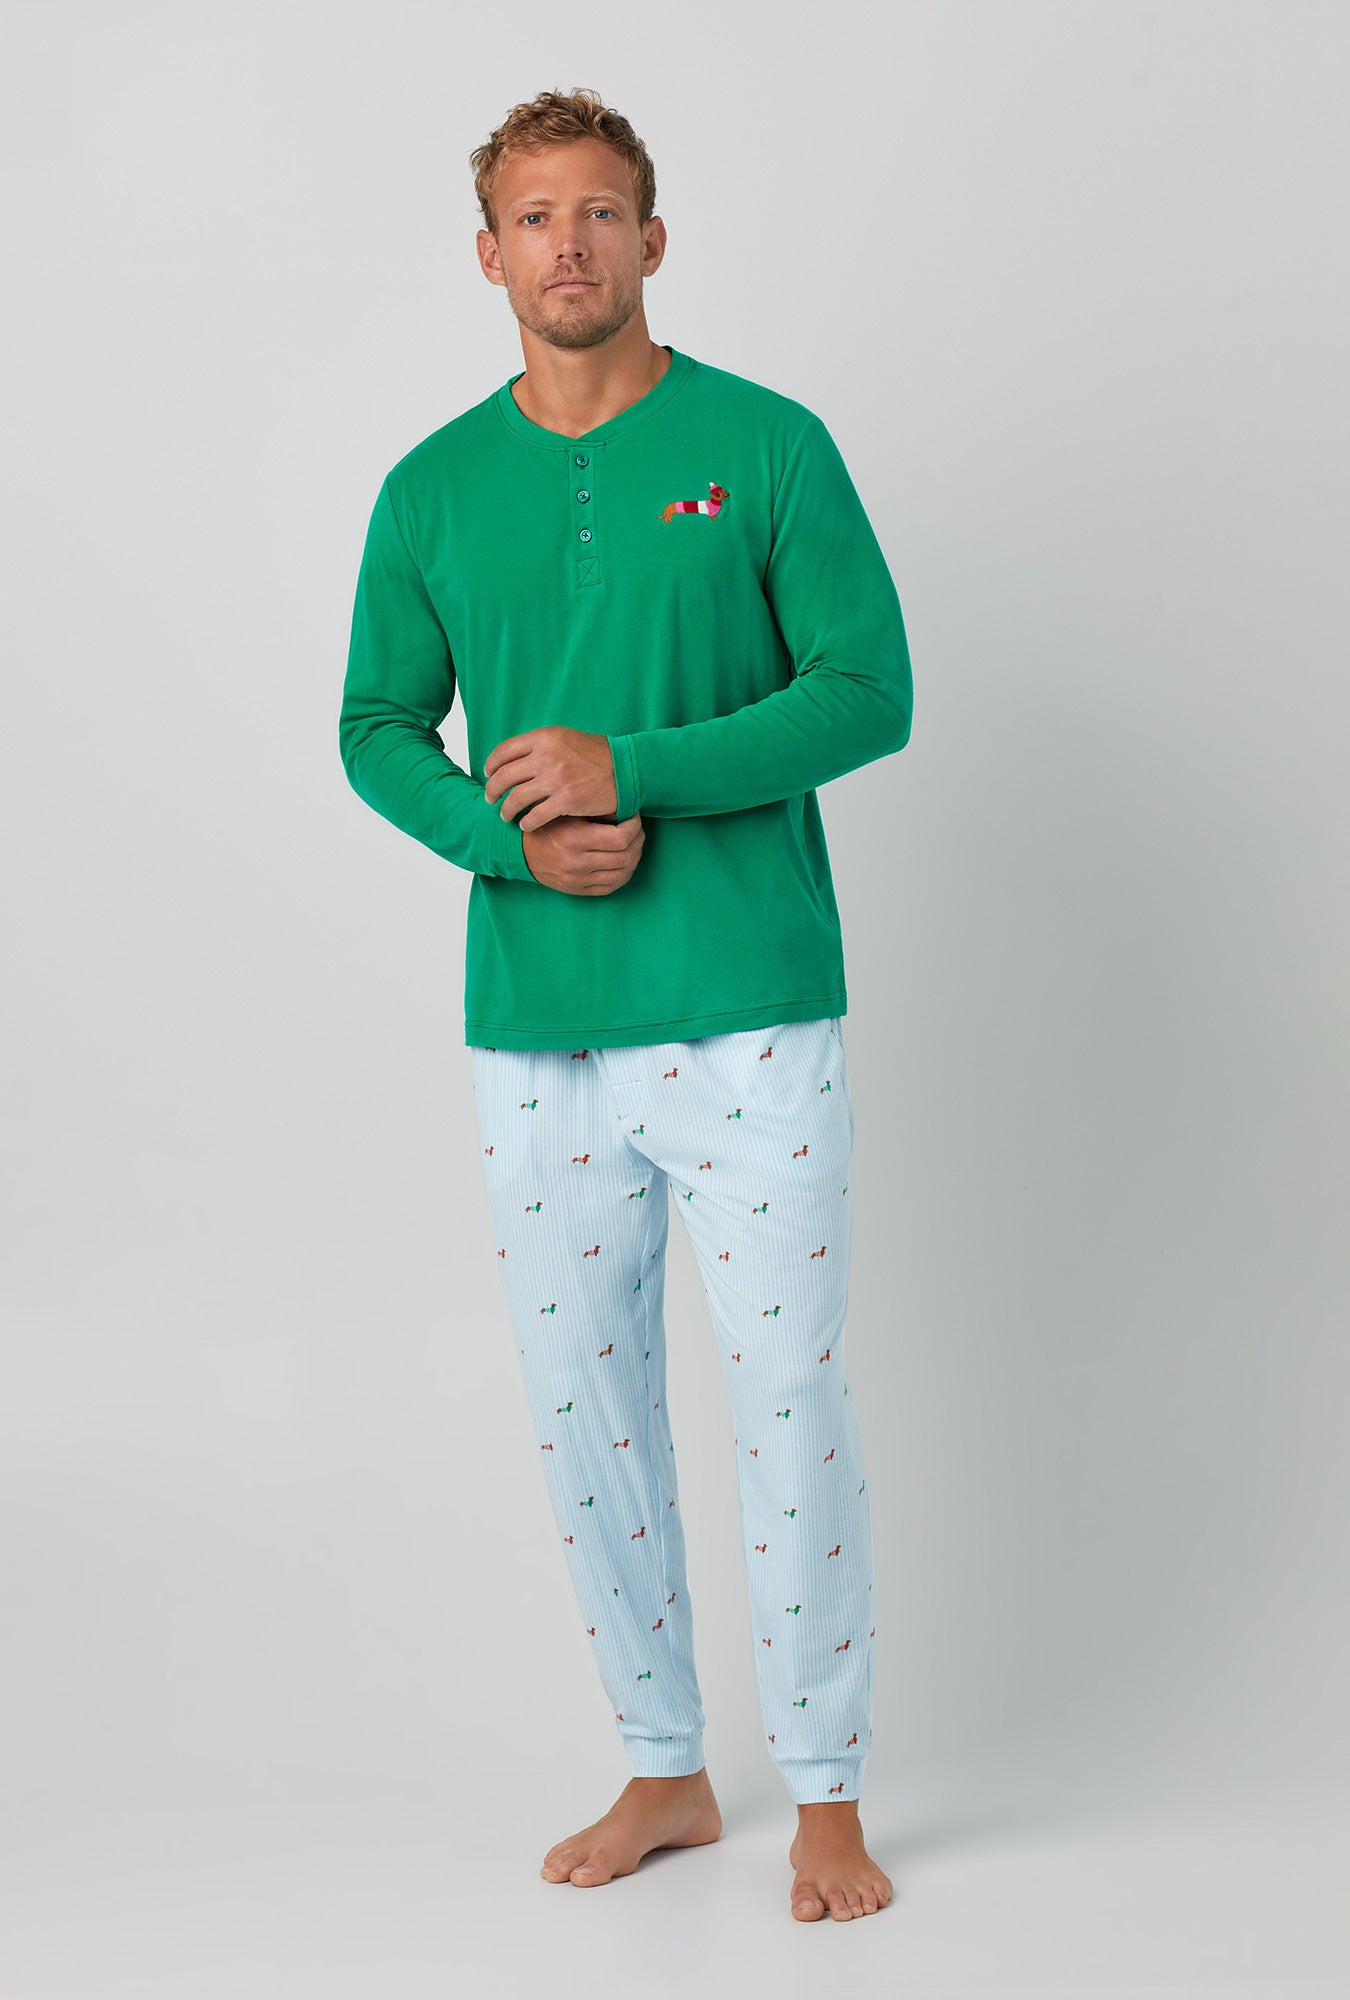 A men wearing green Long Sleeve Jogger Stretch Jersey PJ Set with Dach shun print